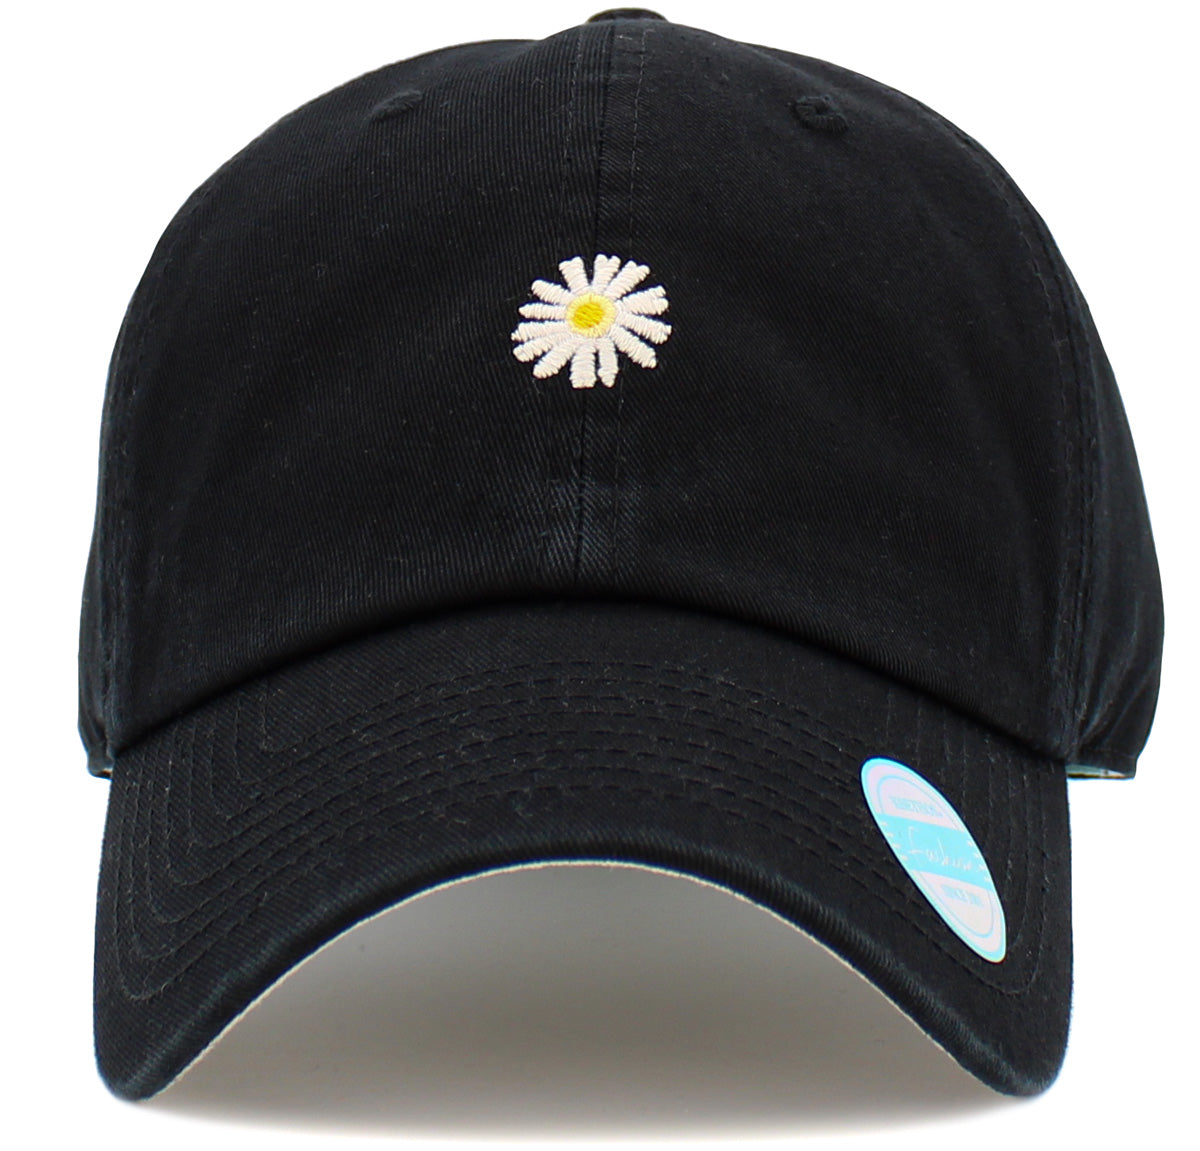 WKB006 Daisy Print Embroidery Hat Baseball Cap